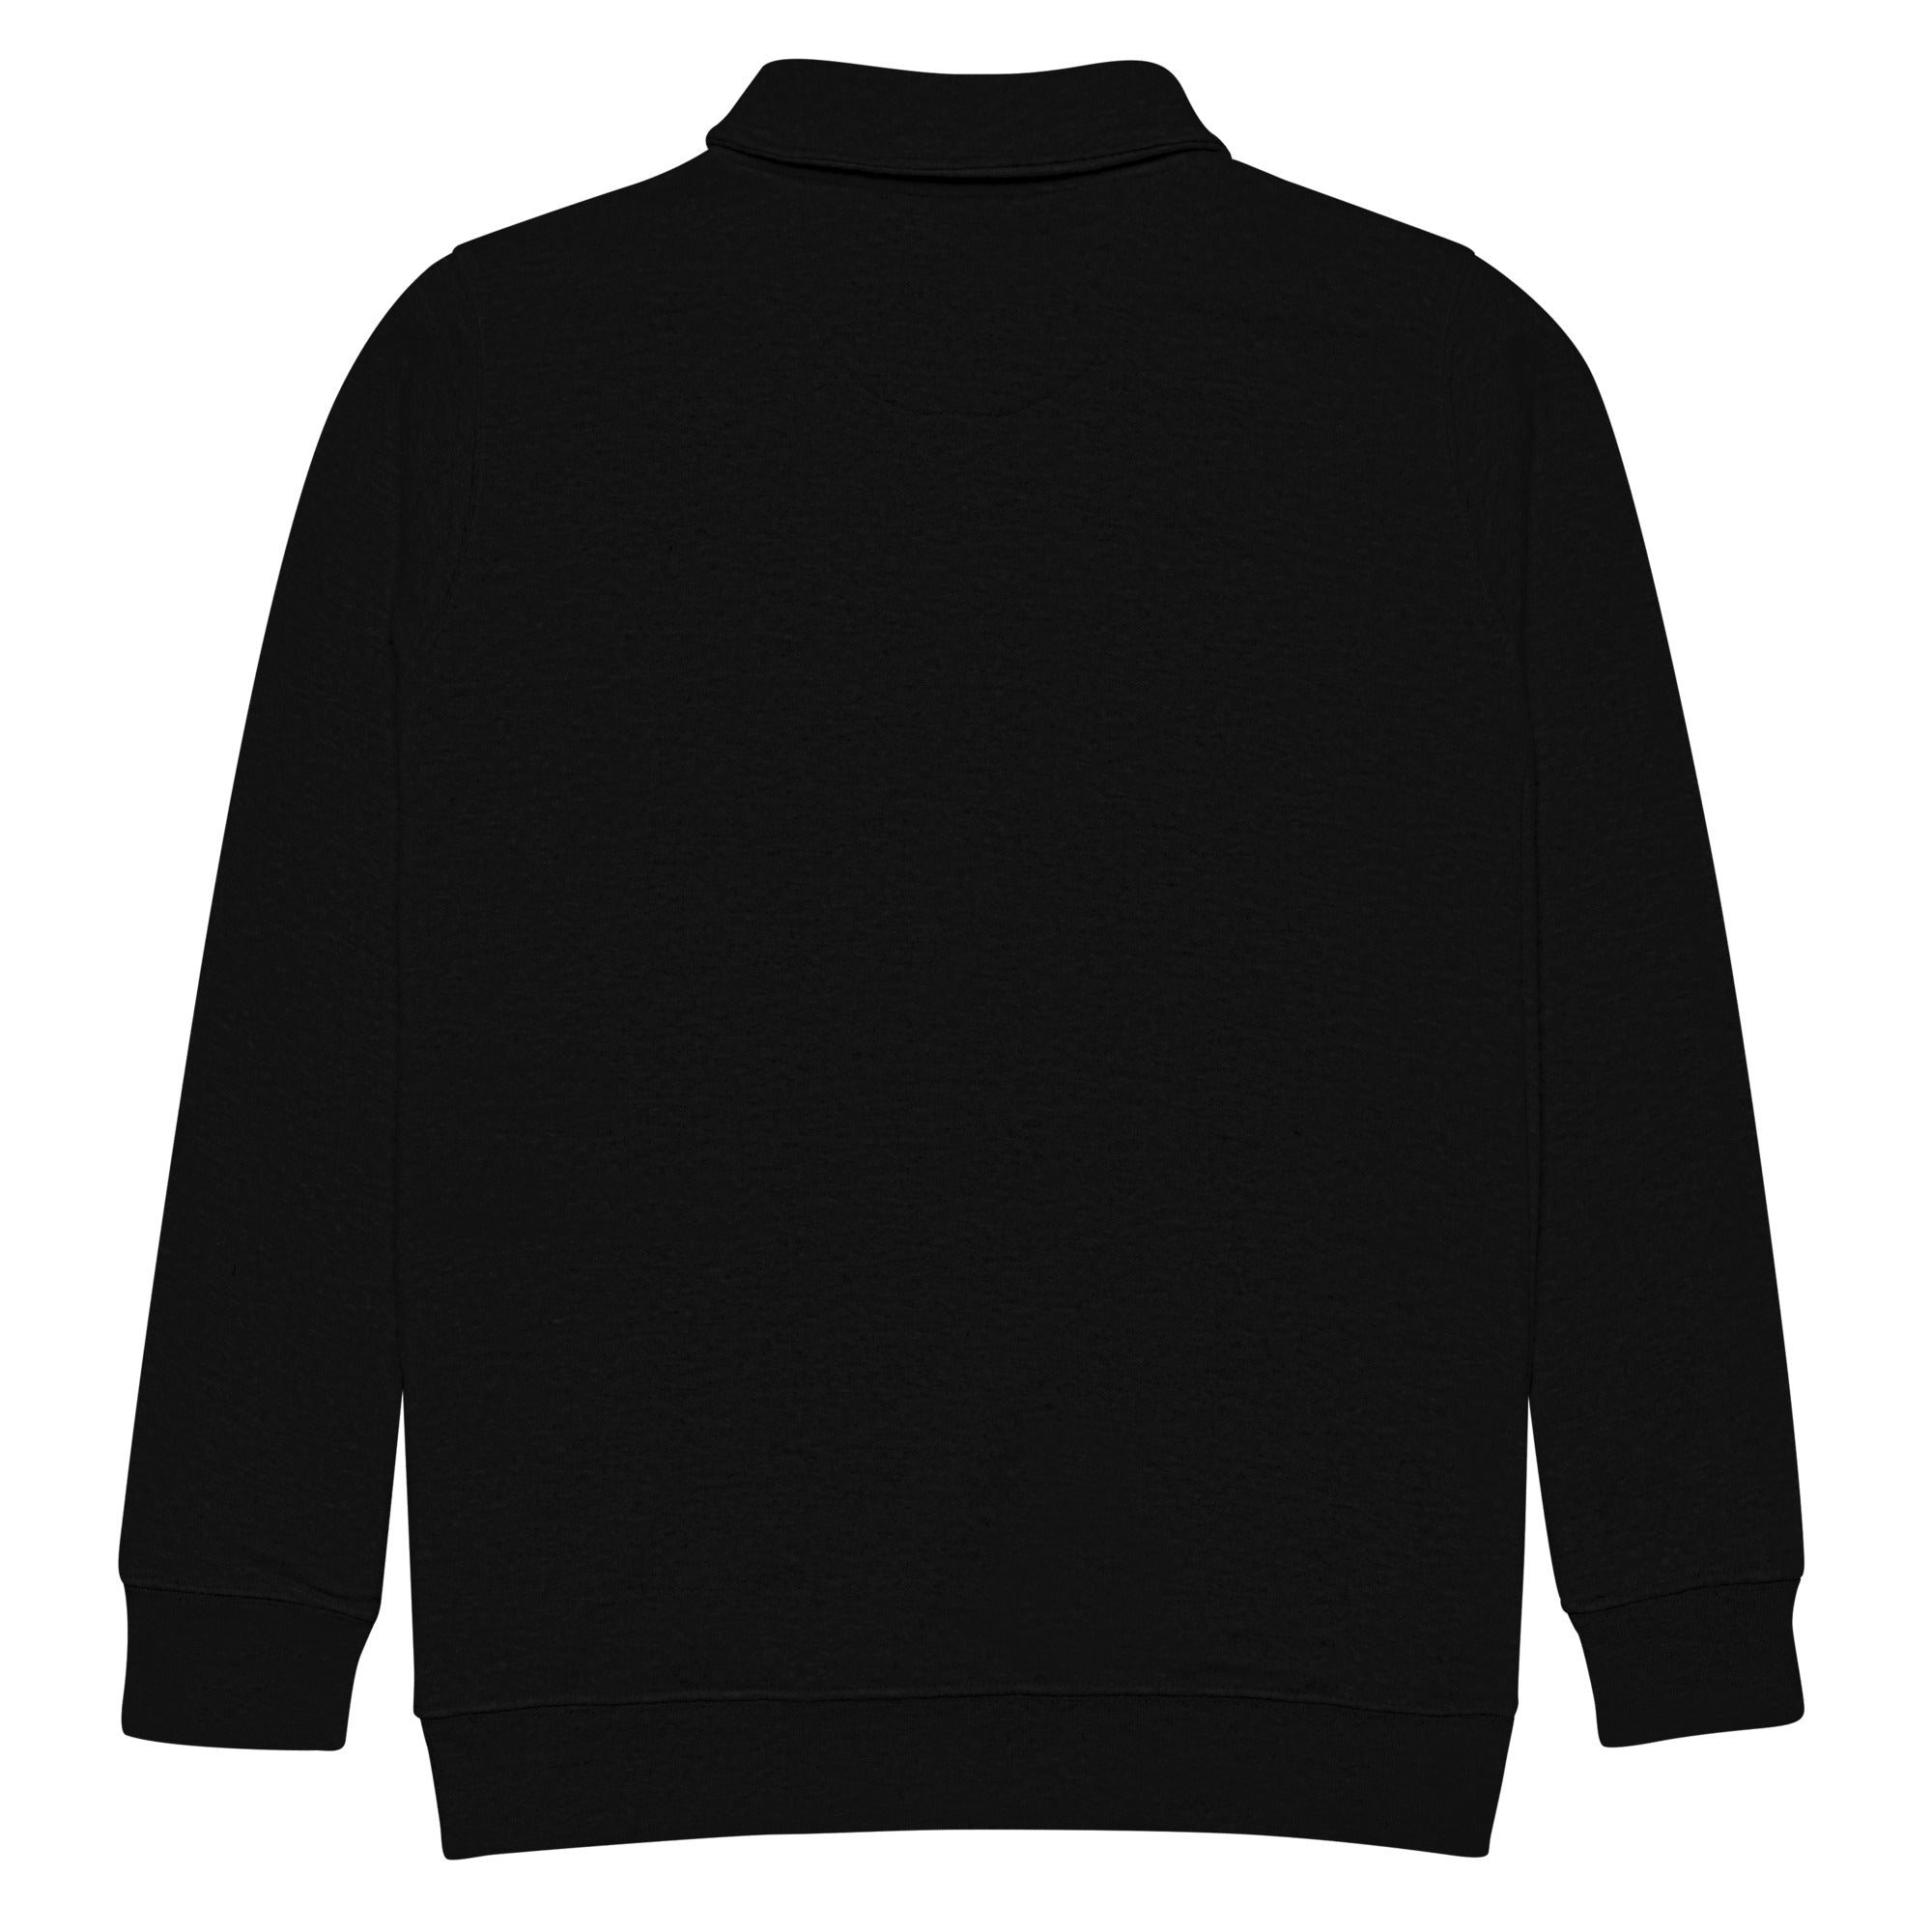 unisex-fleece-pullover-black-back-64cc1a8846ef5.jpg